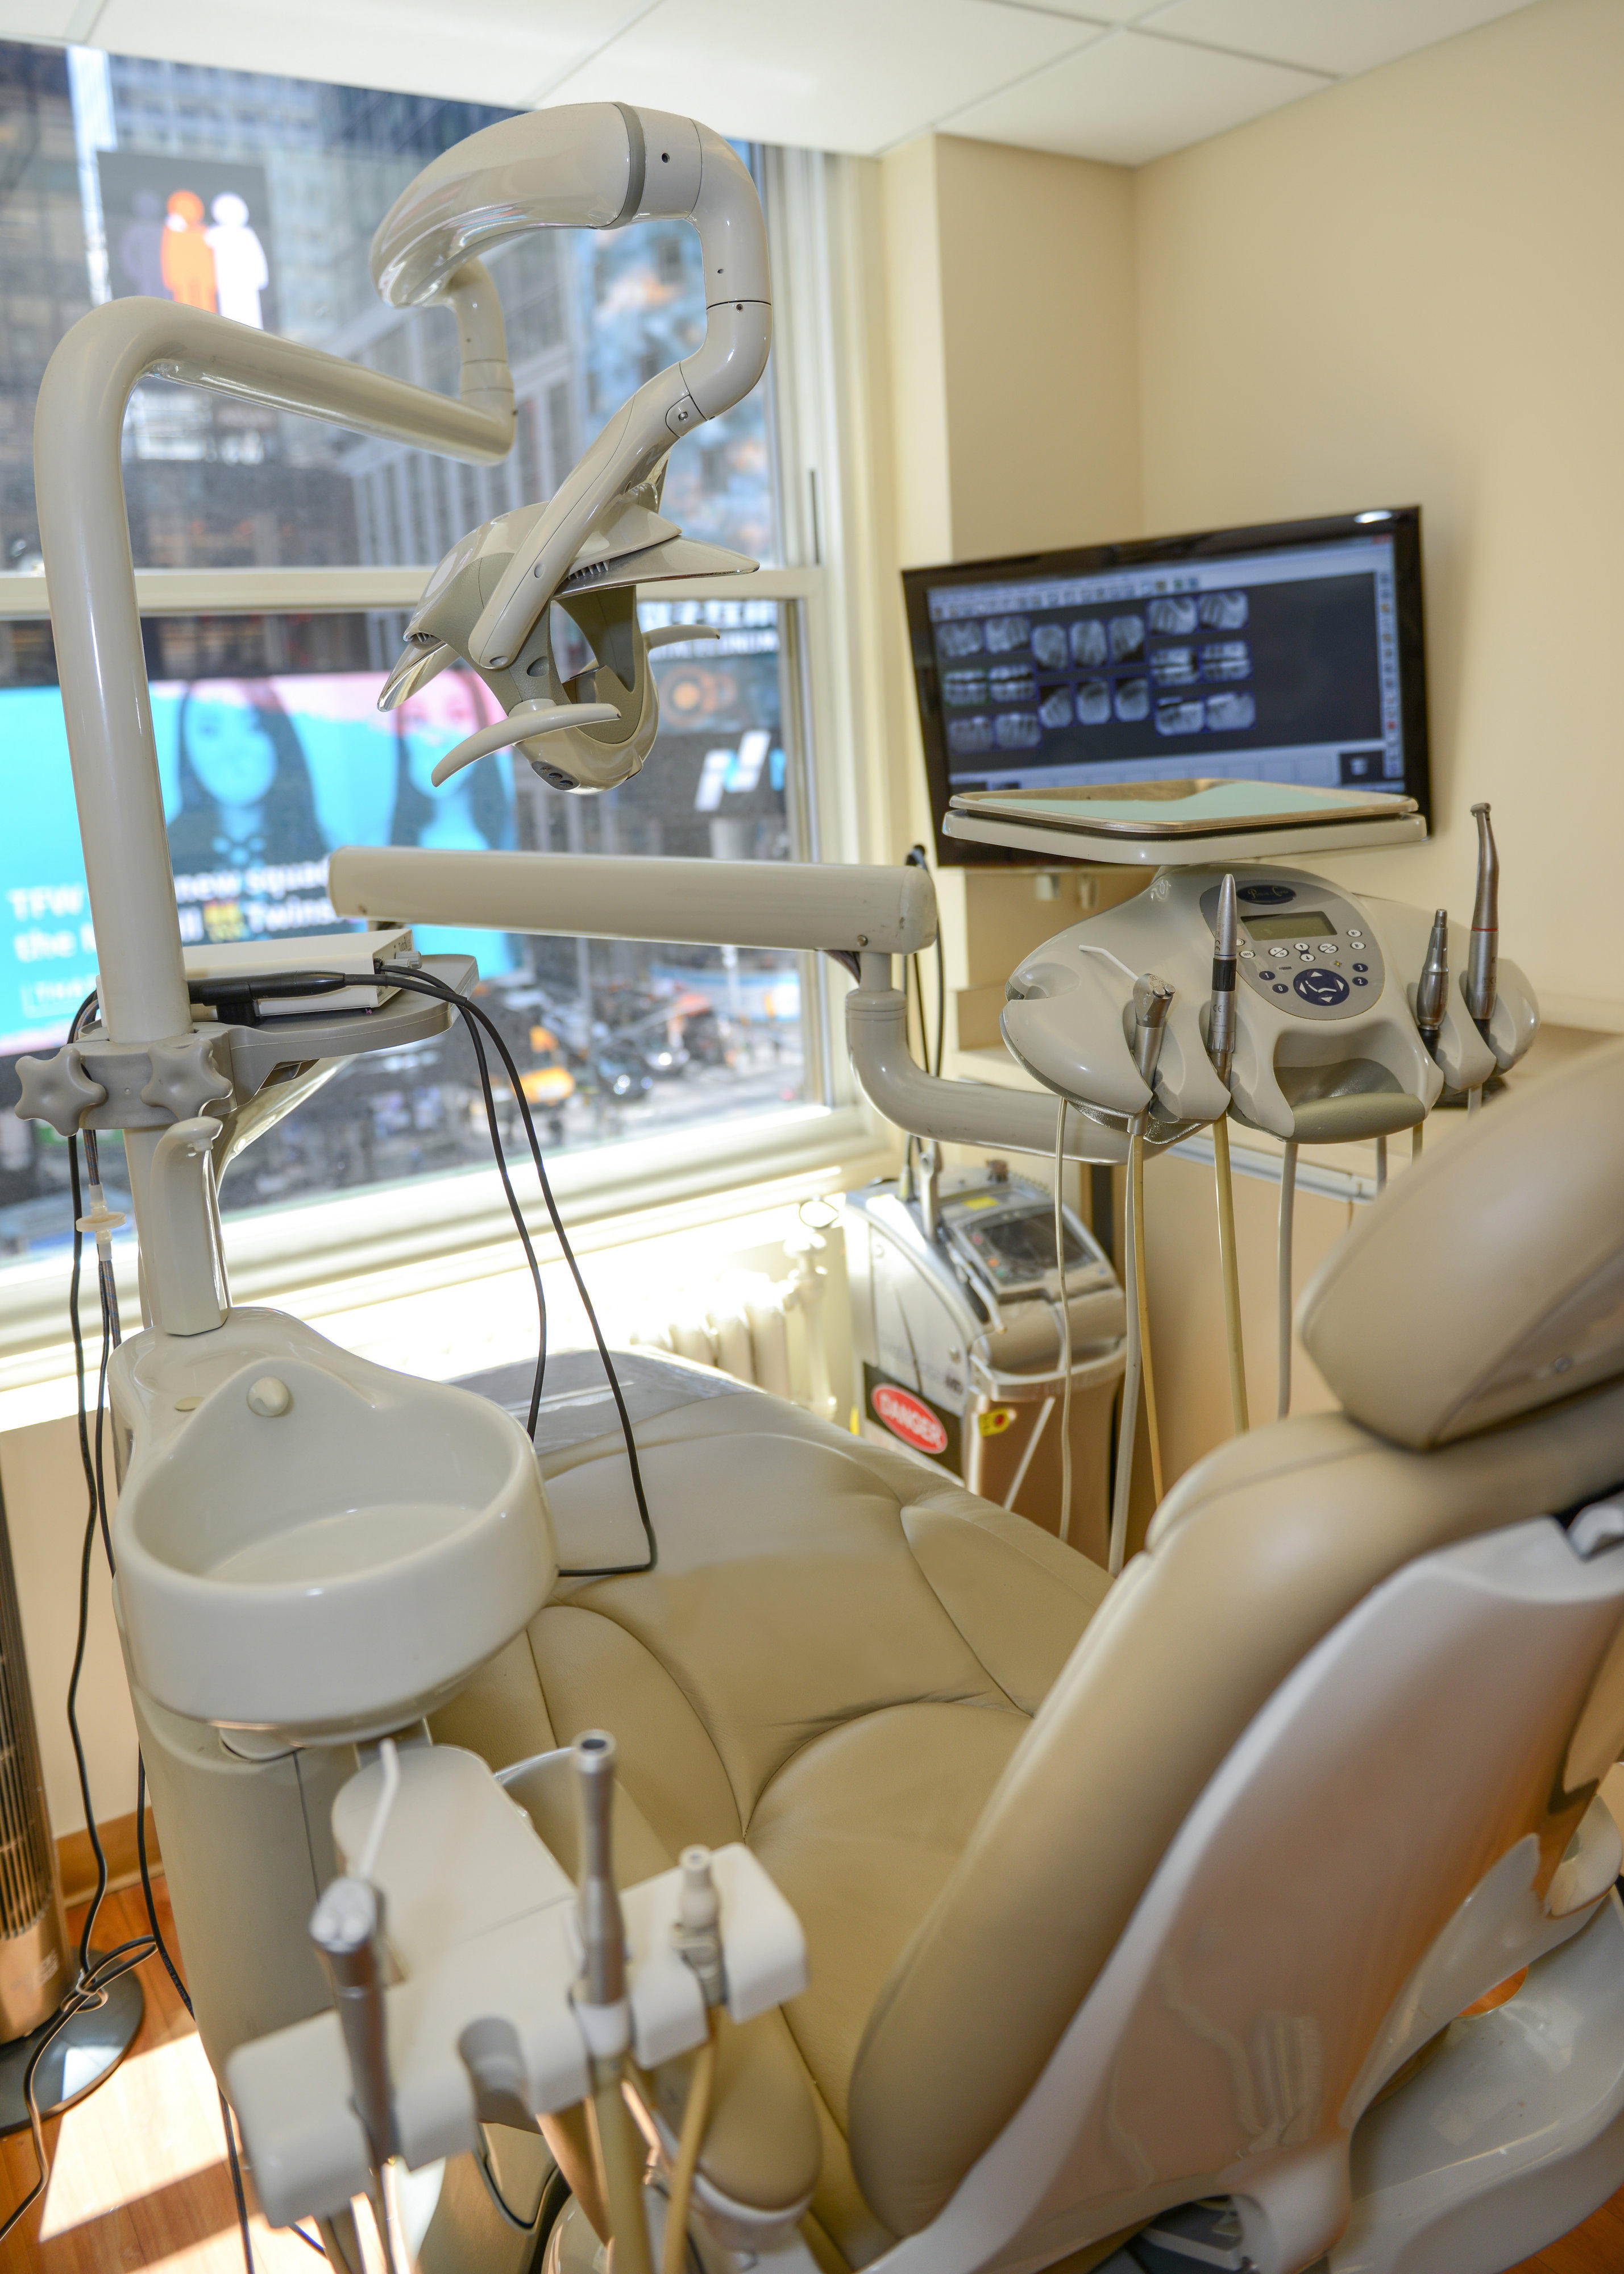 Midtown Dental Care setup